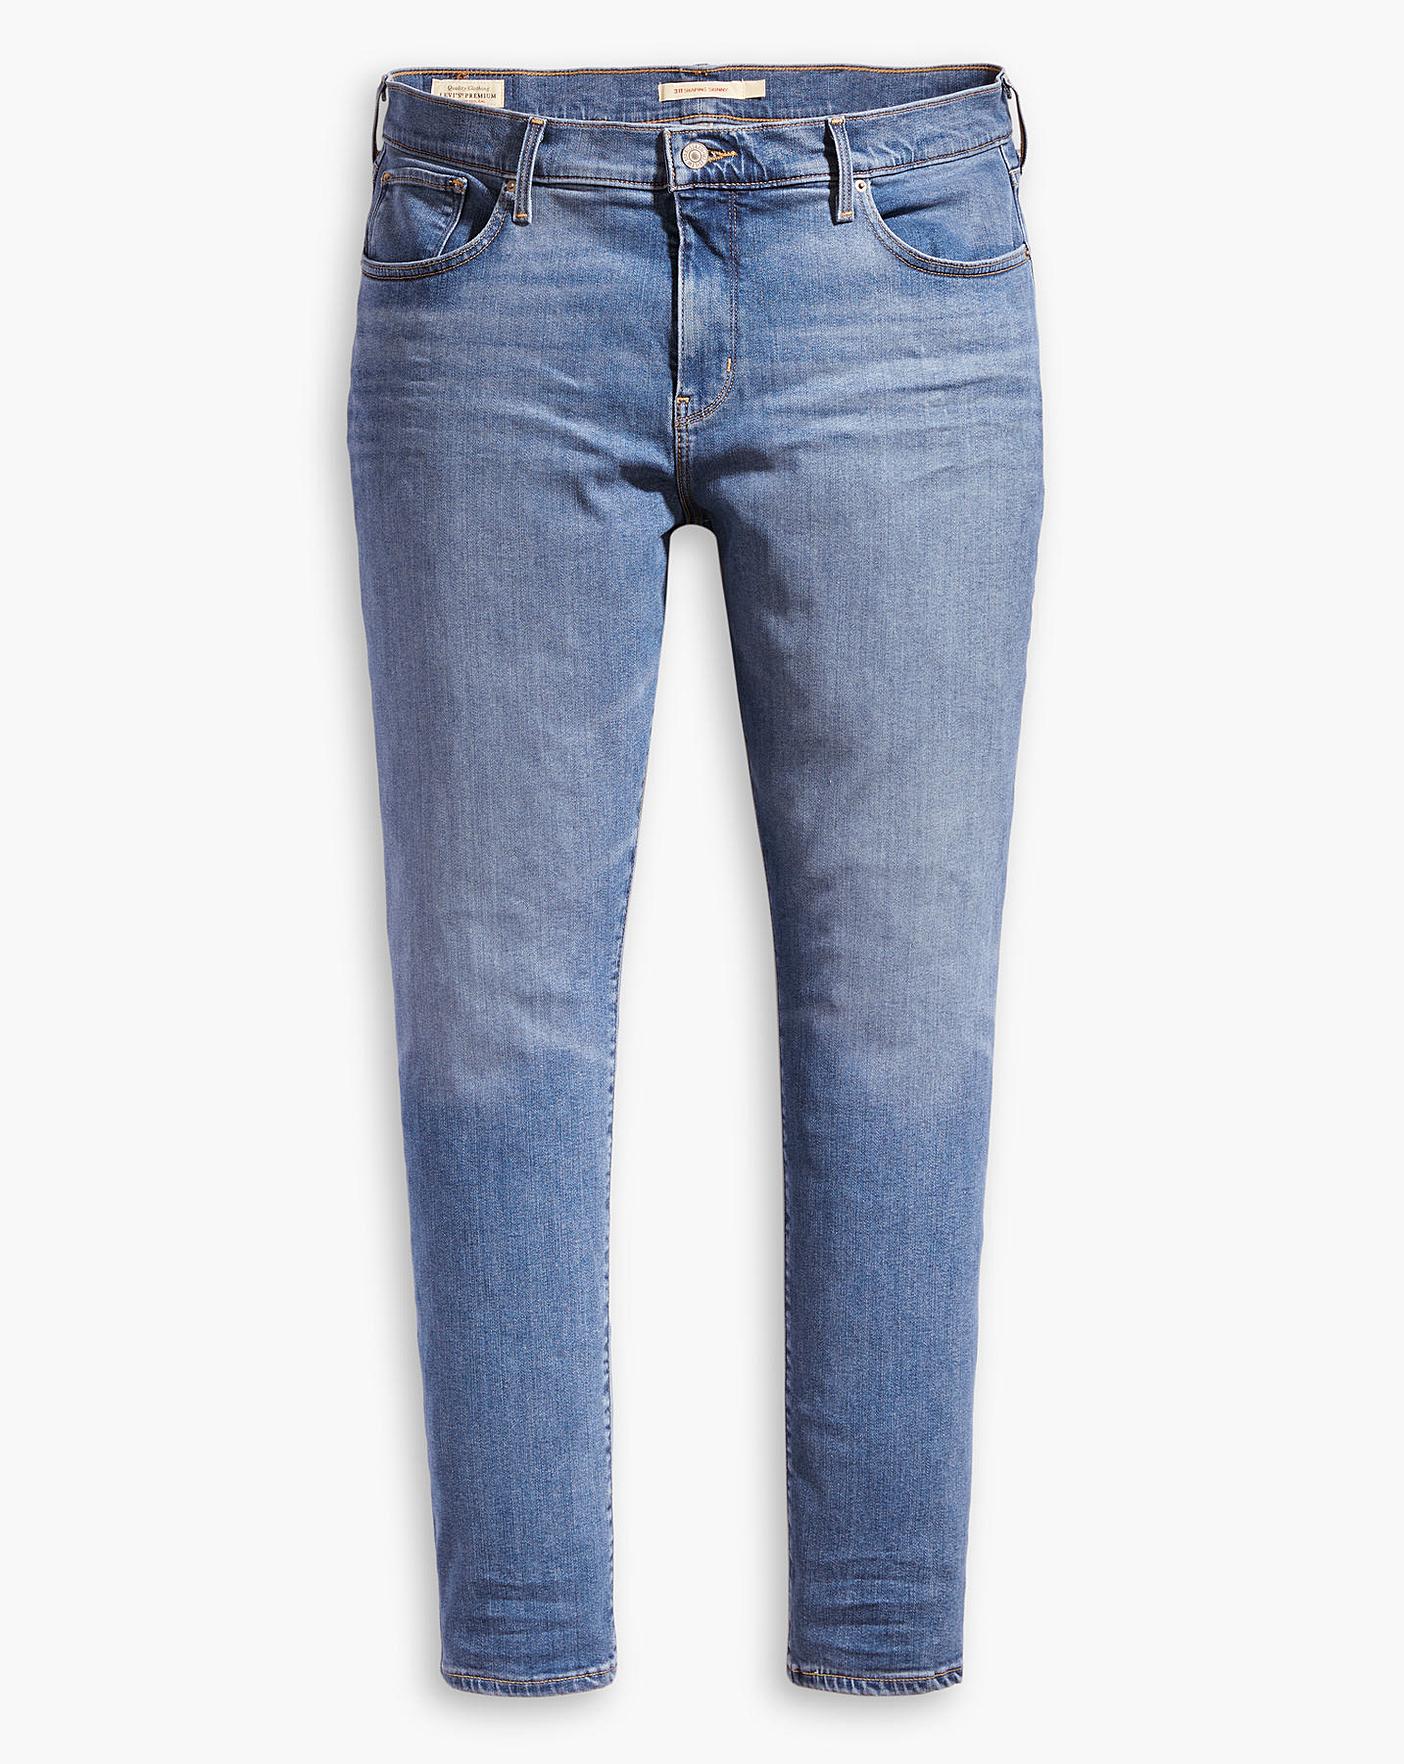 Levi S 311 Shaping Skinny Jeans Marisota